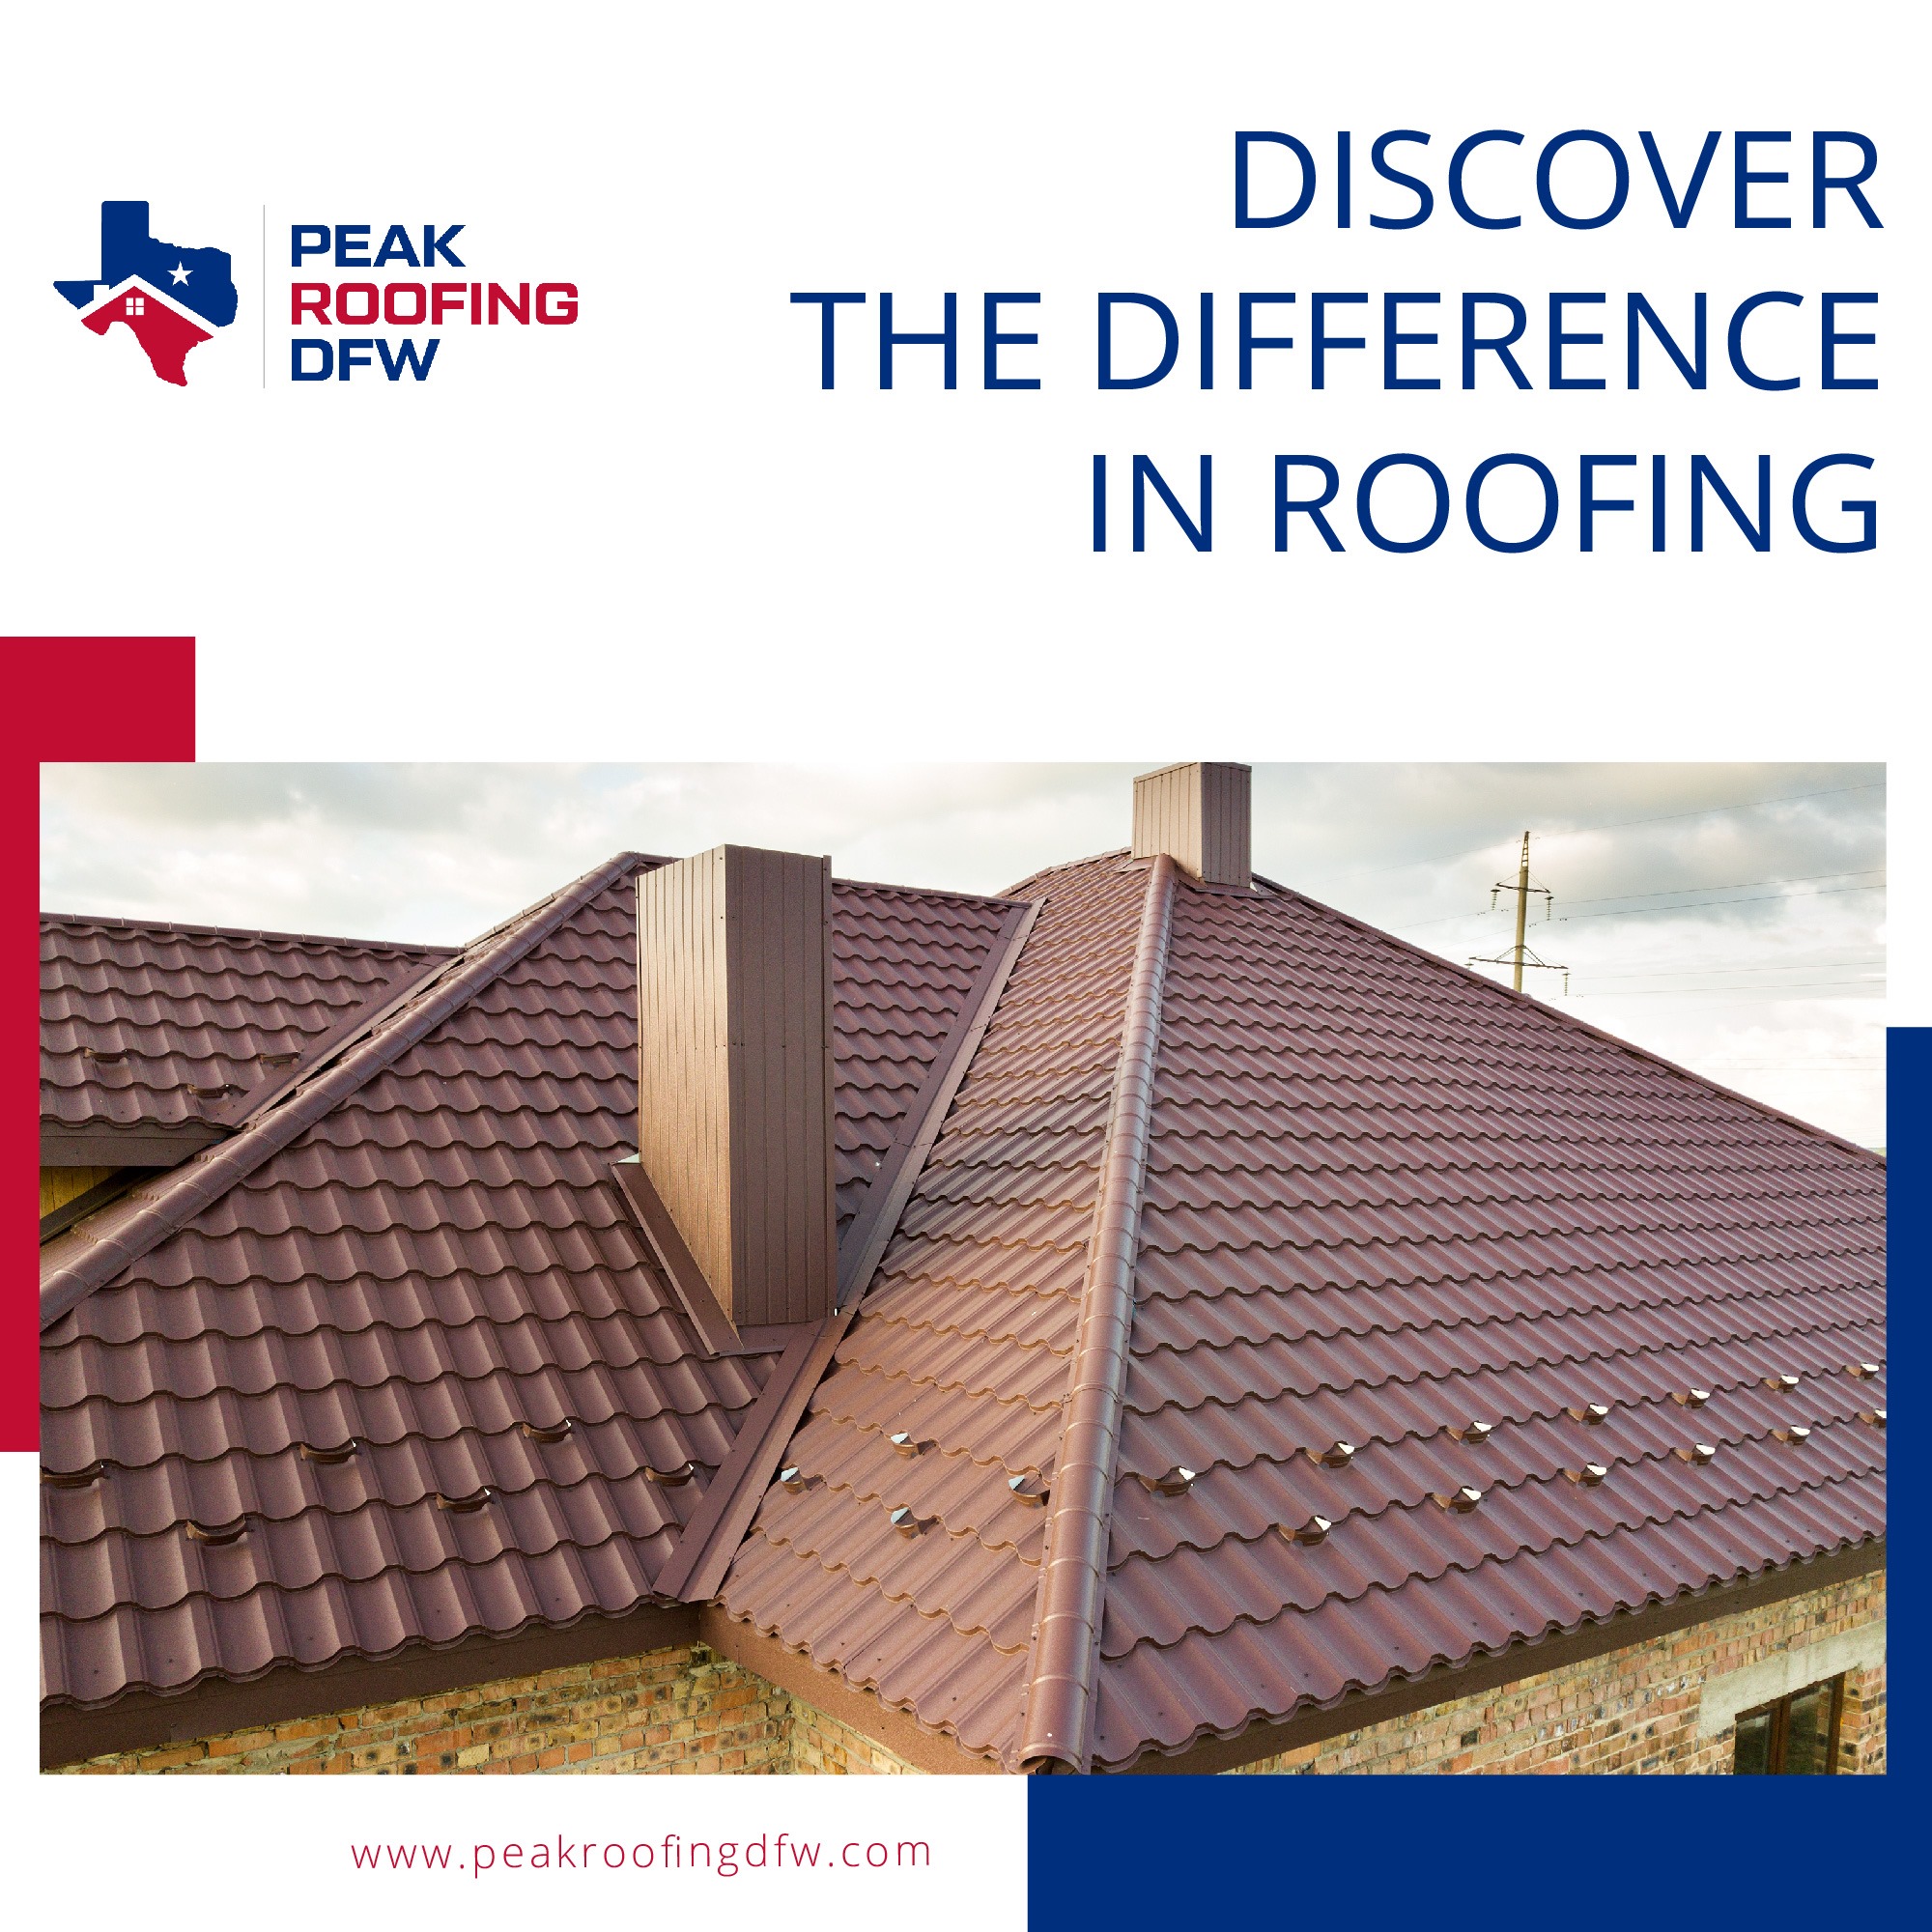 Grapevine roofing contractors - Peak Roofing DFW